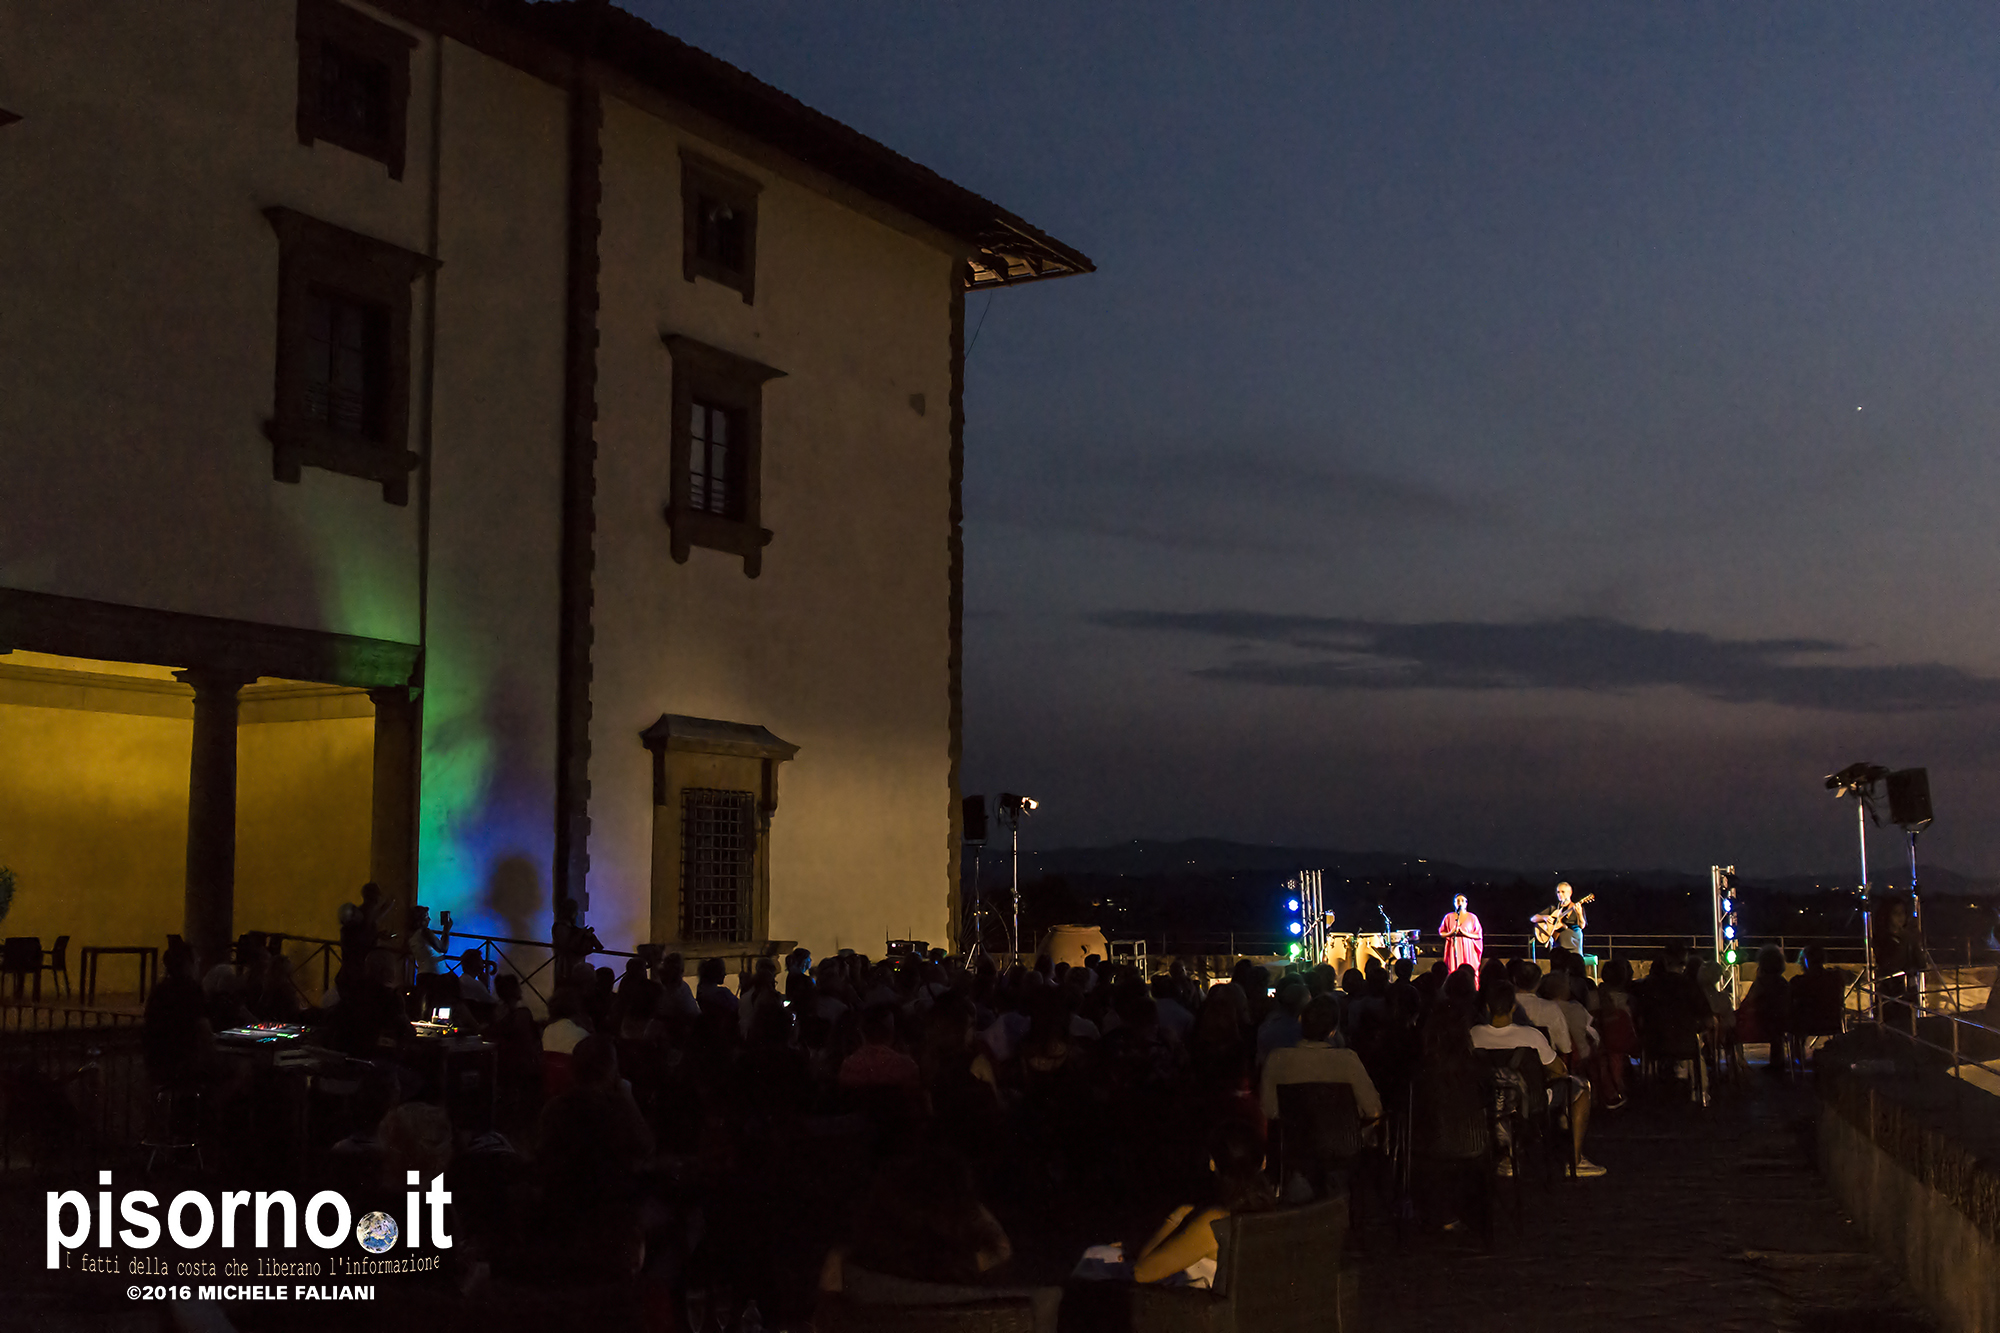 Noa & Gil Dor live @ Forte Belvedere (Firenze, Italy), August 2nd 2018